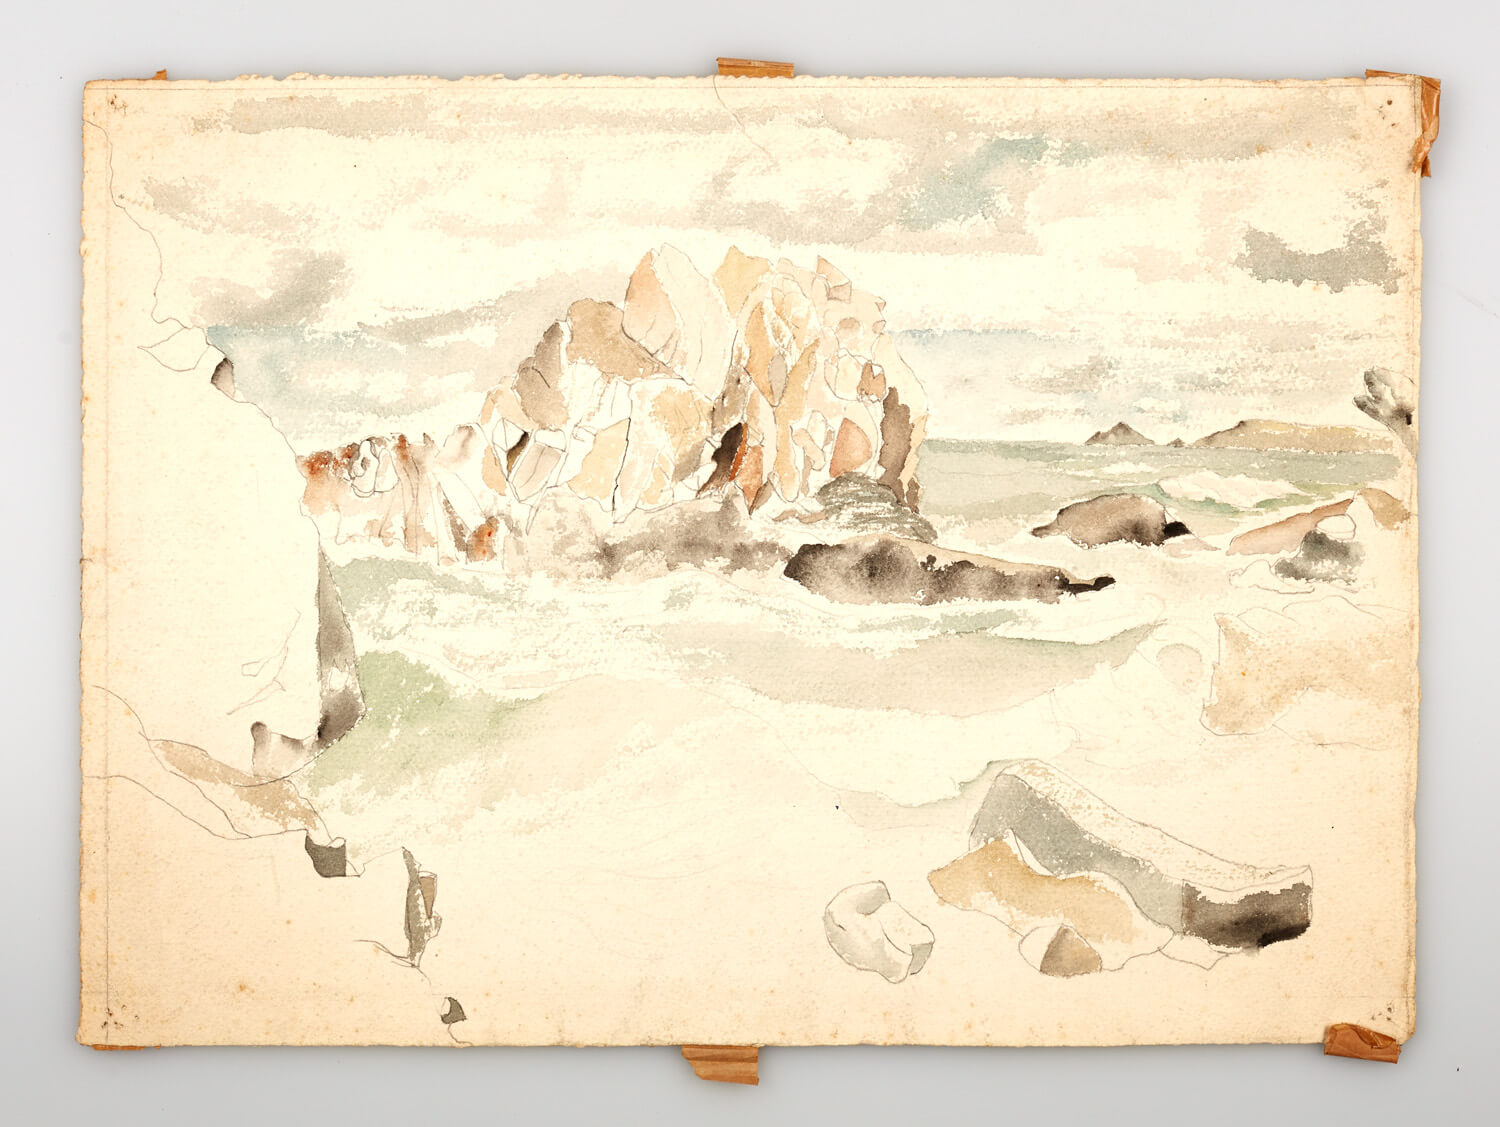 JB259 - Rock and sea, Cornwall sketch - 1946 - 28.5 x 39 cm - Watercolour